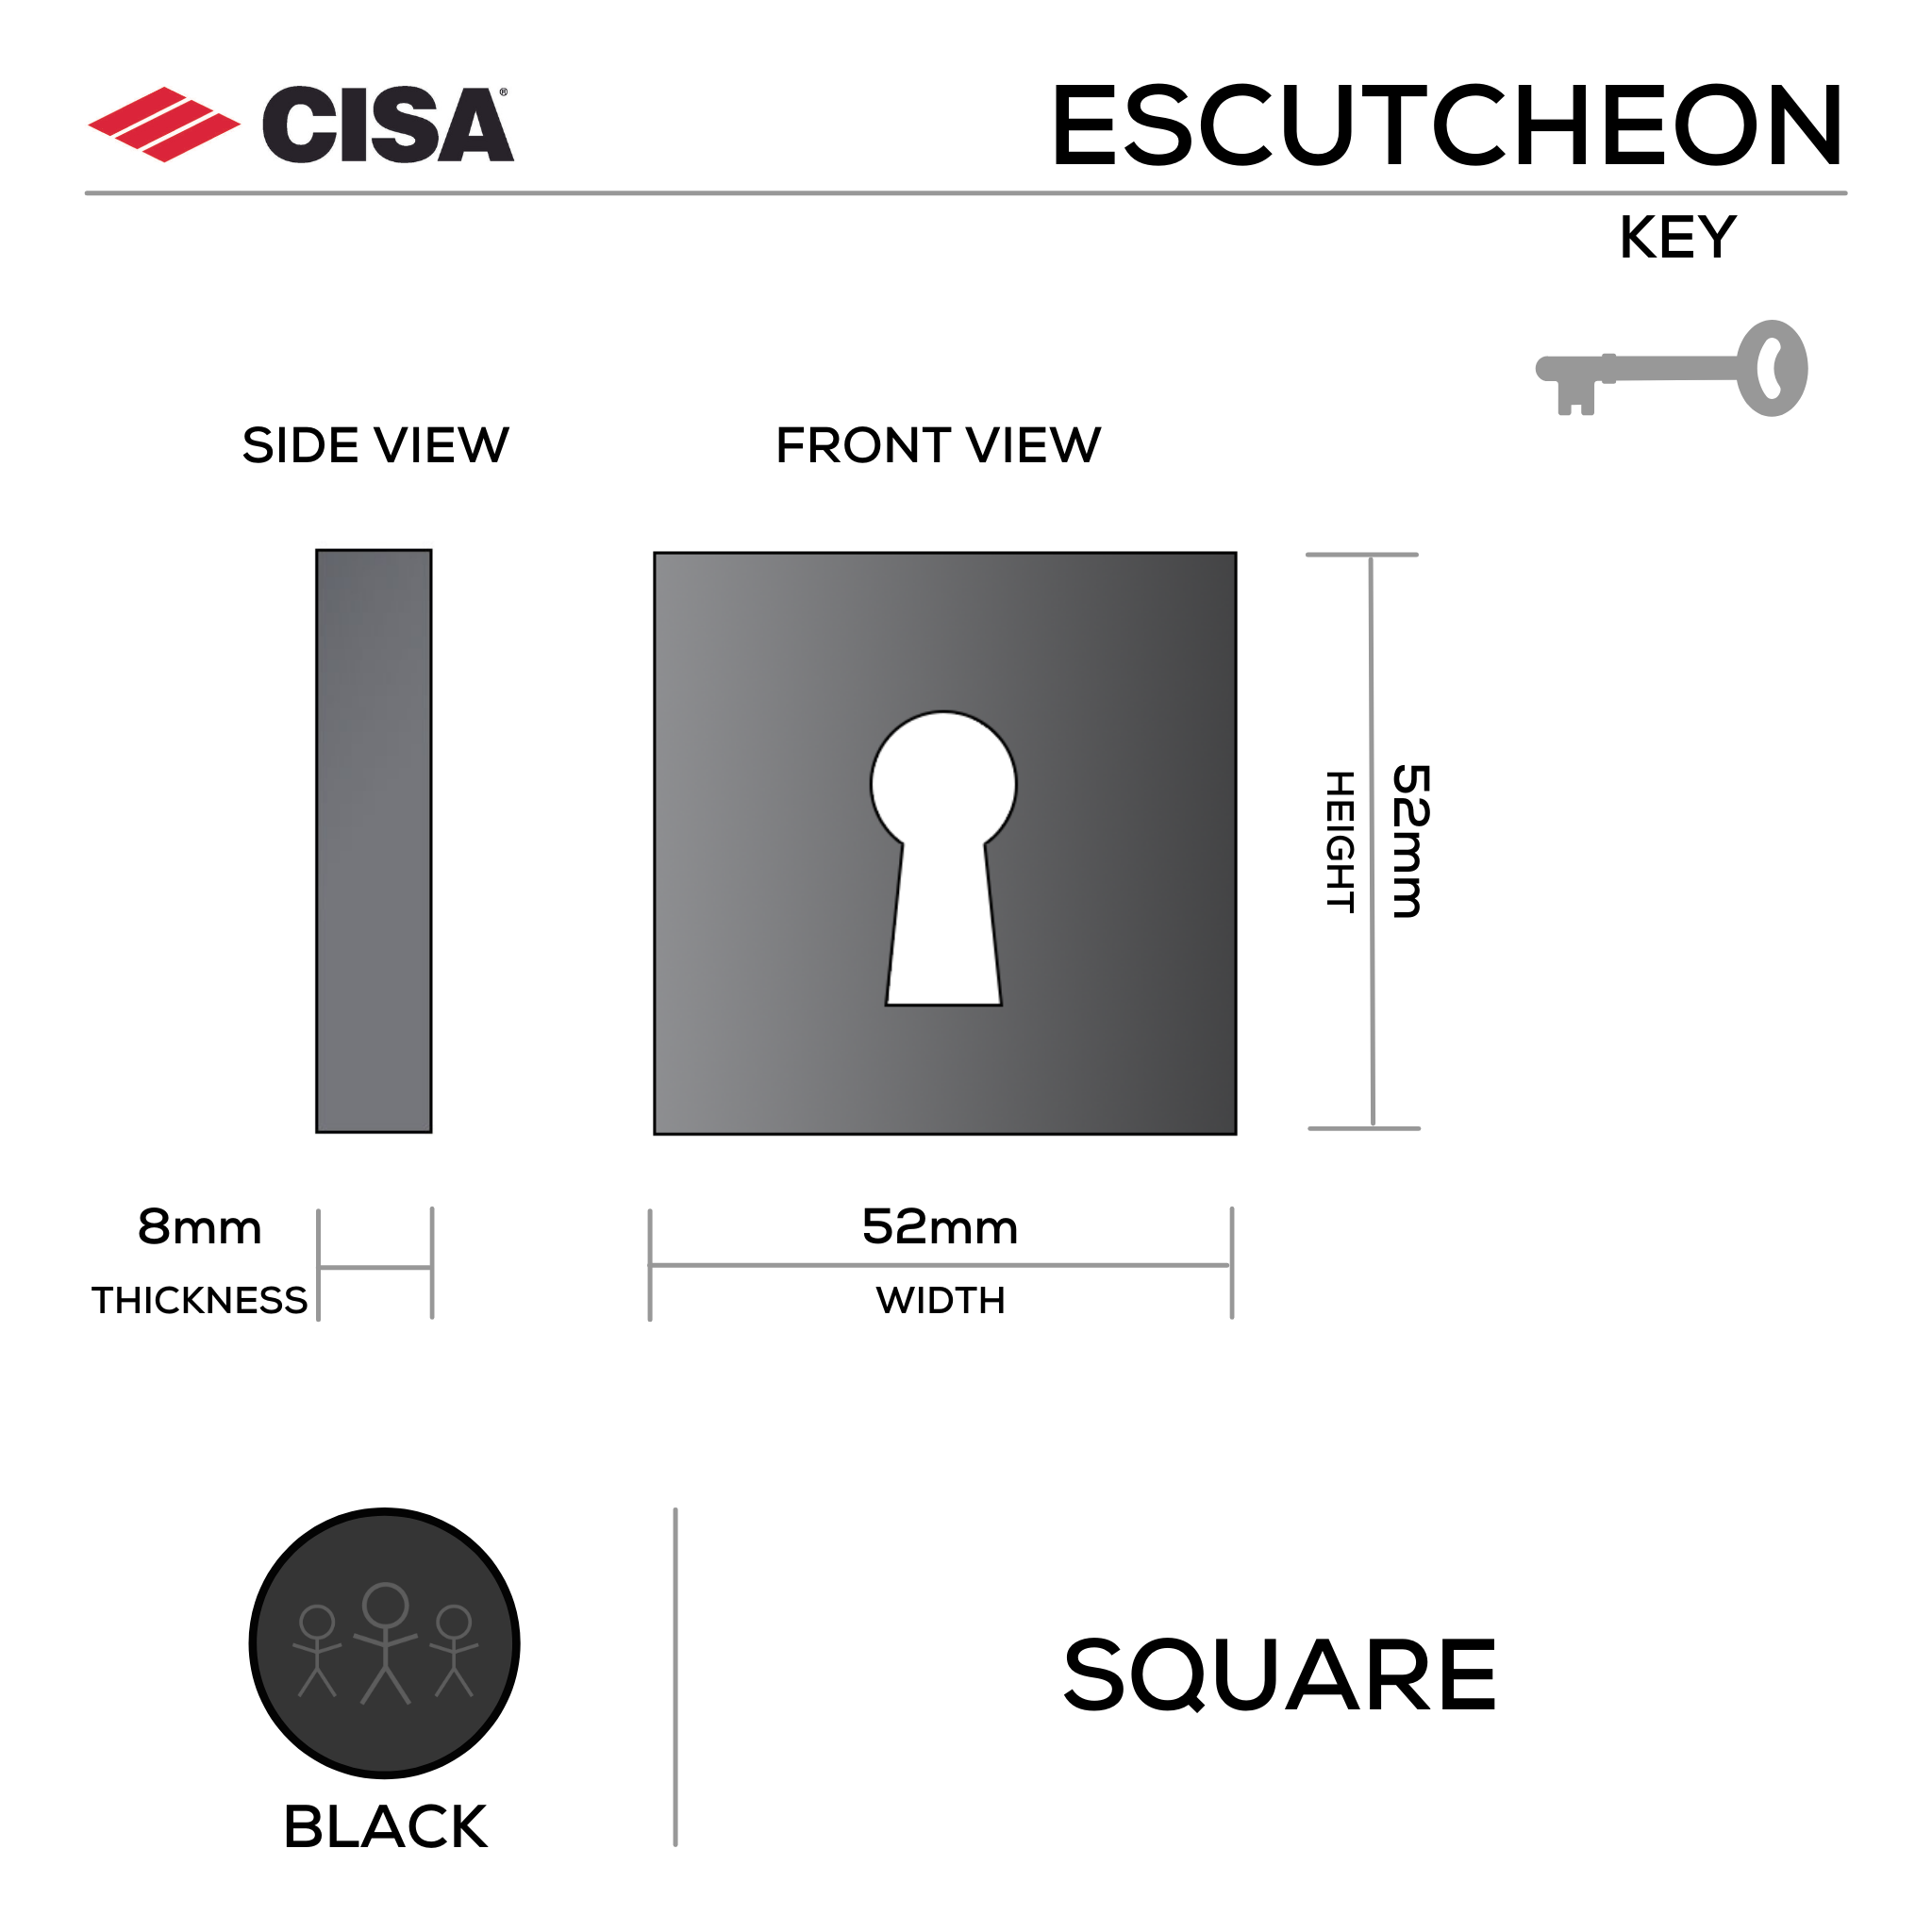 FE.S.K.MBL, Keyhole Escutcheon, Square Rose, 52mm (h) x 52mm (w) x 8mm (t), Black, CISA